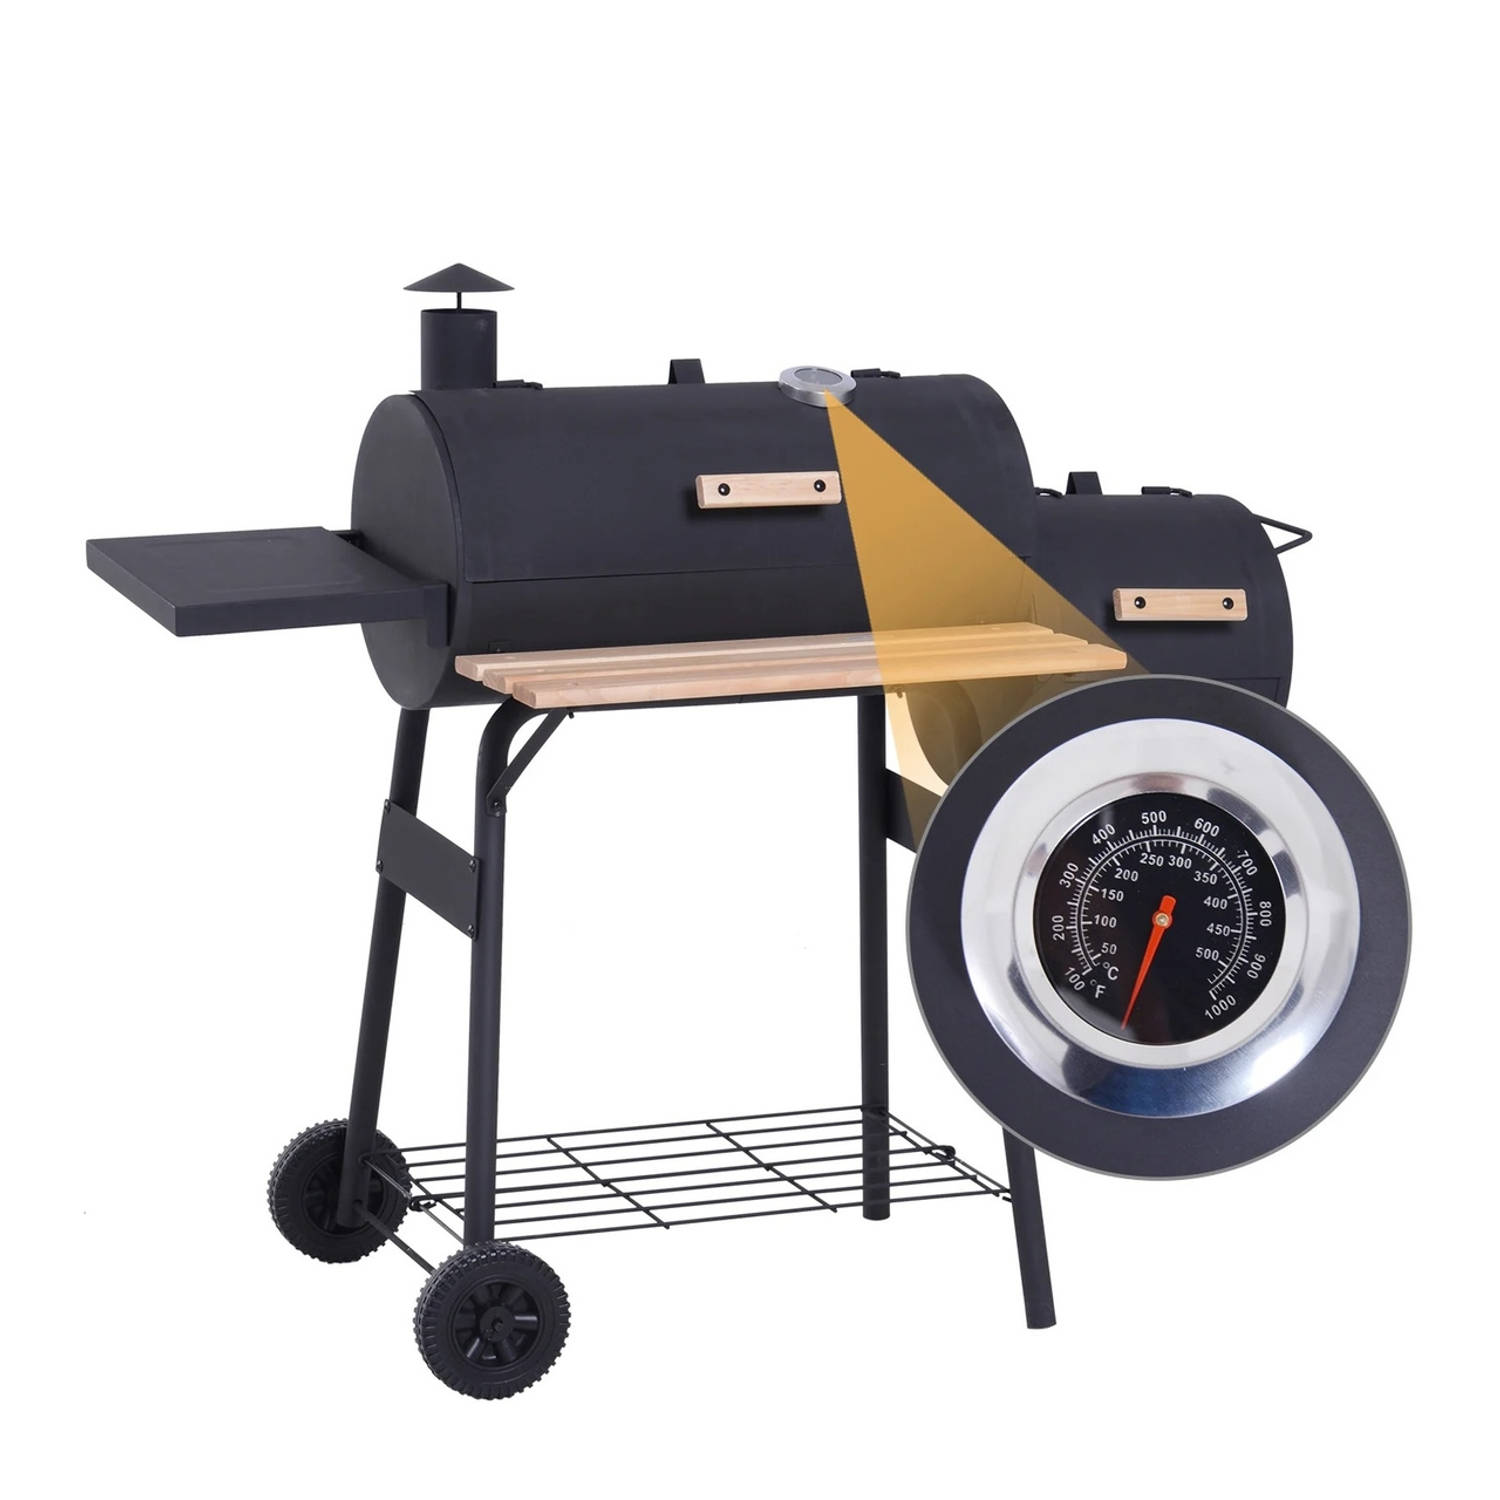 Houtskool Barbecue - Bbq - Grill - Barbeque - Rookoven - Smoker - 124 X 53 X 108 Cm - Zwart